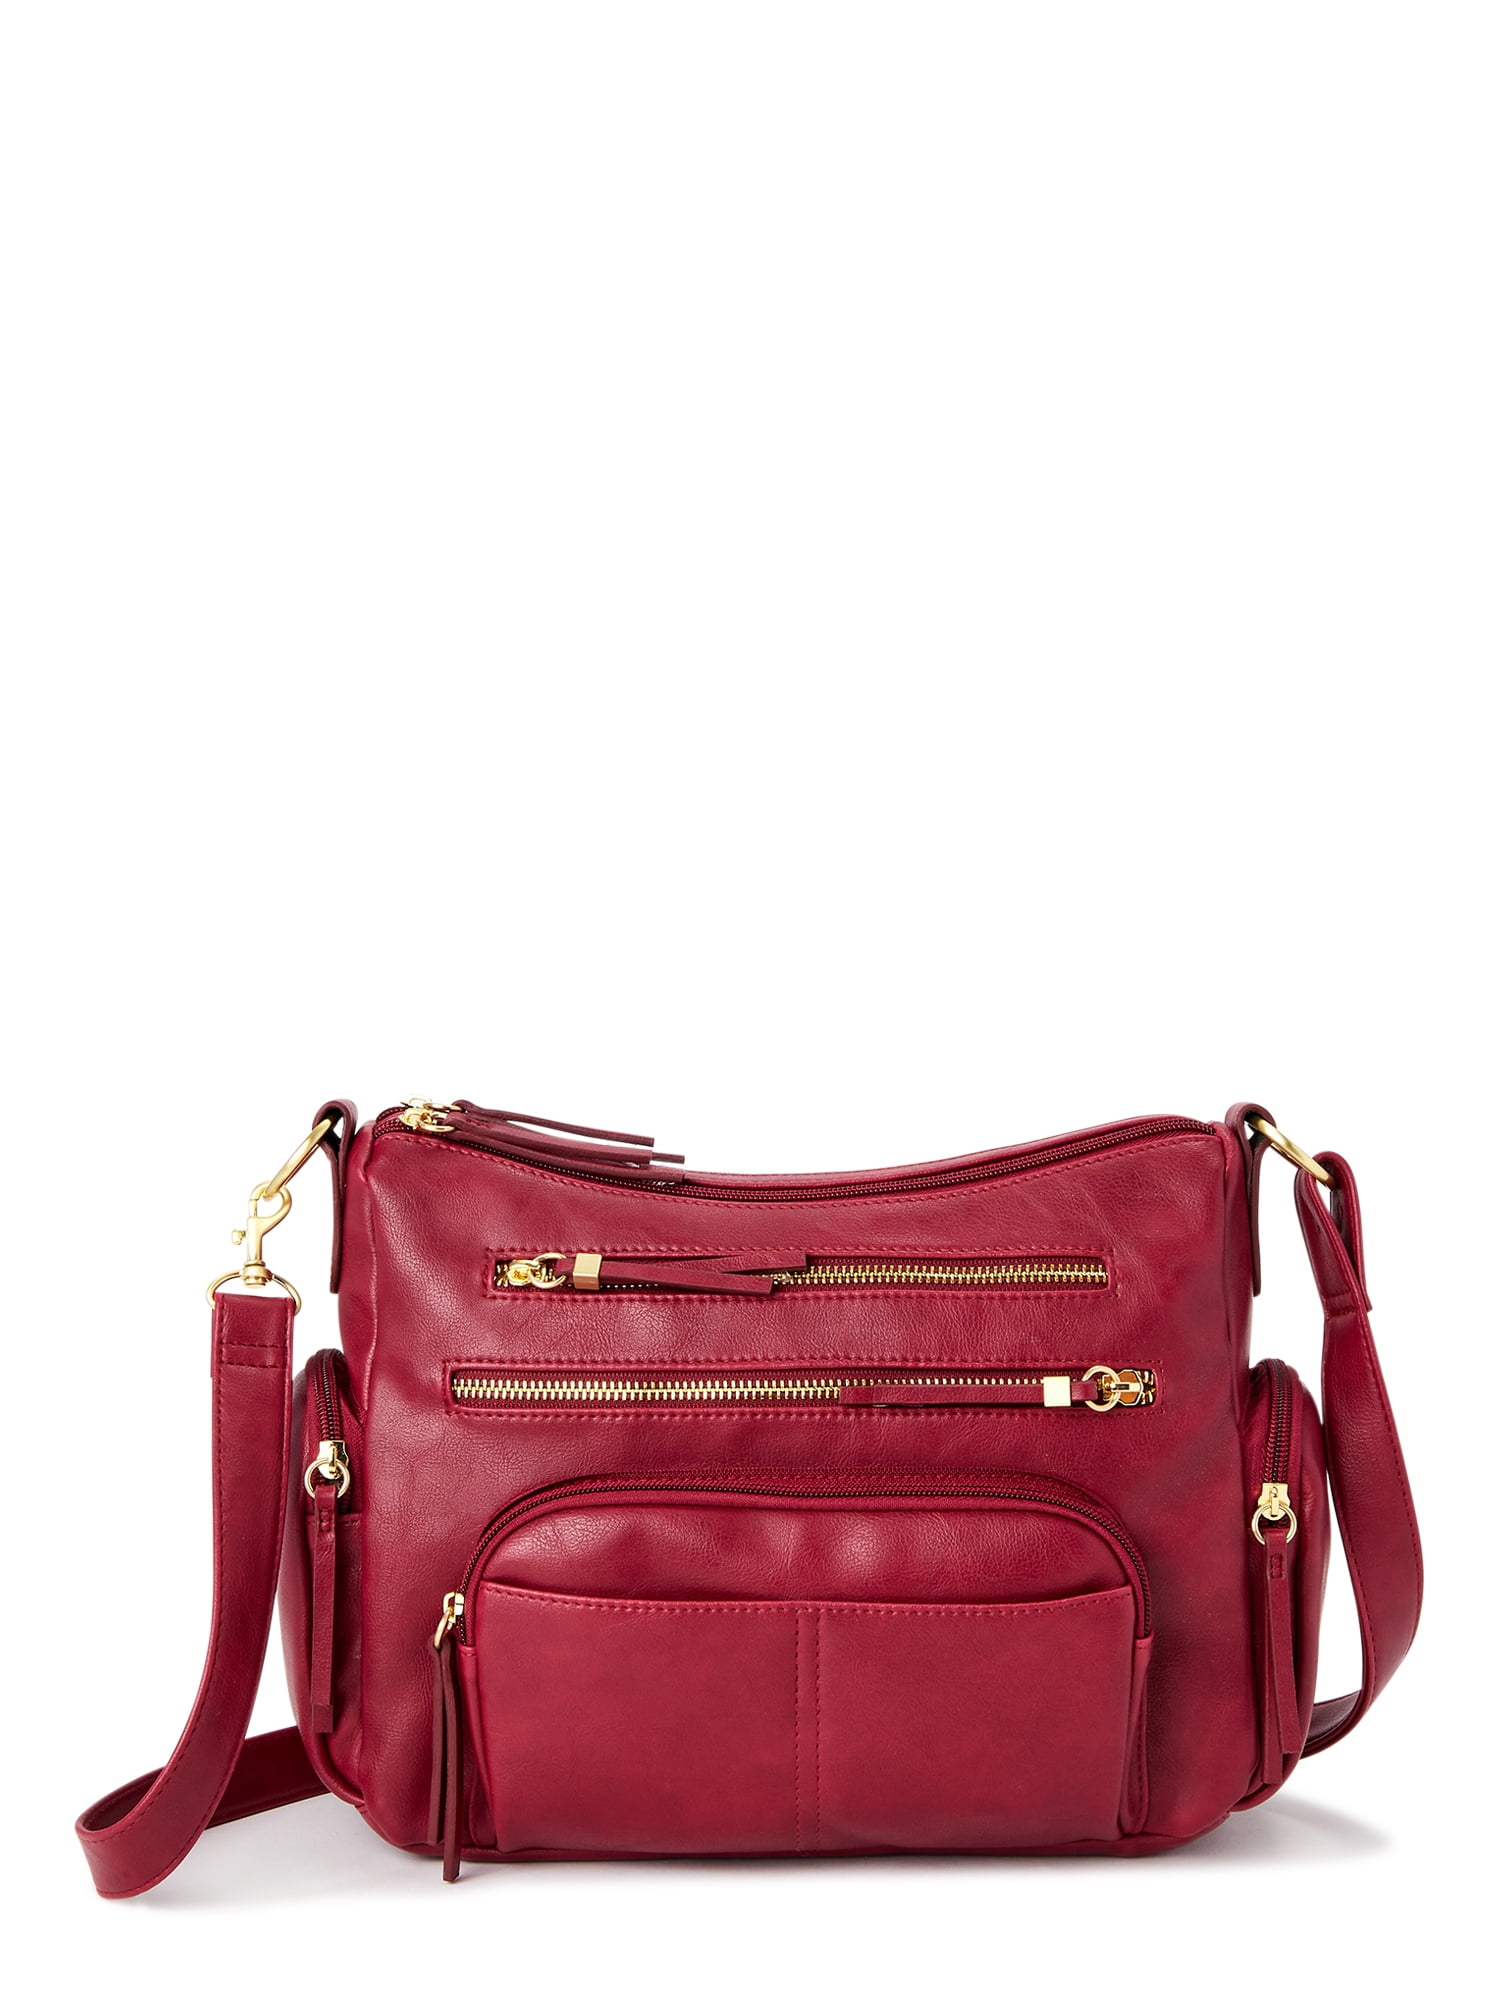 Toping Fine Women Messenger bags Vintage Shoulder Bags handbags Female Cross-body Soft Casual Shopping Bags Chic 